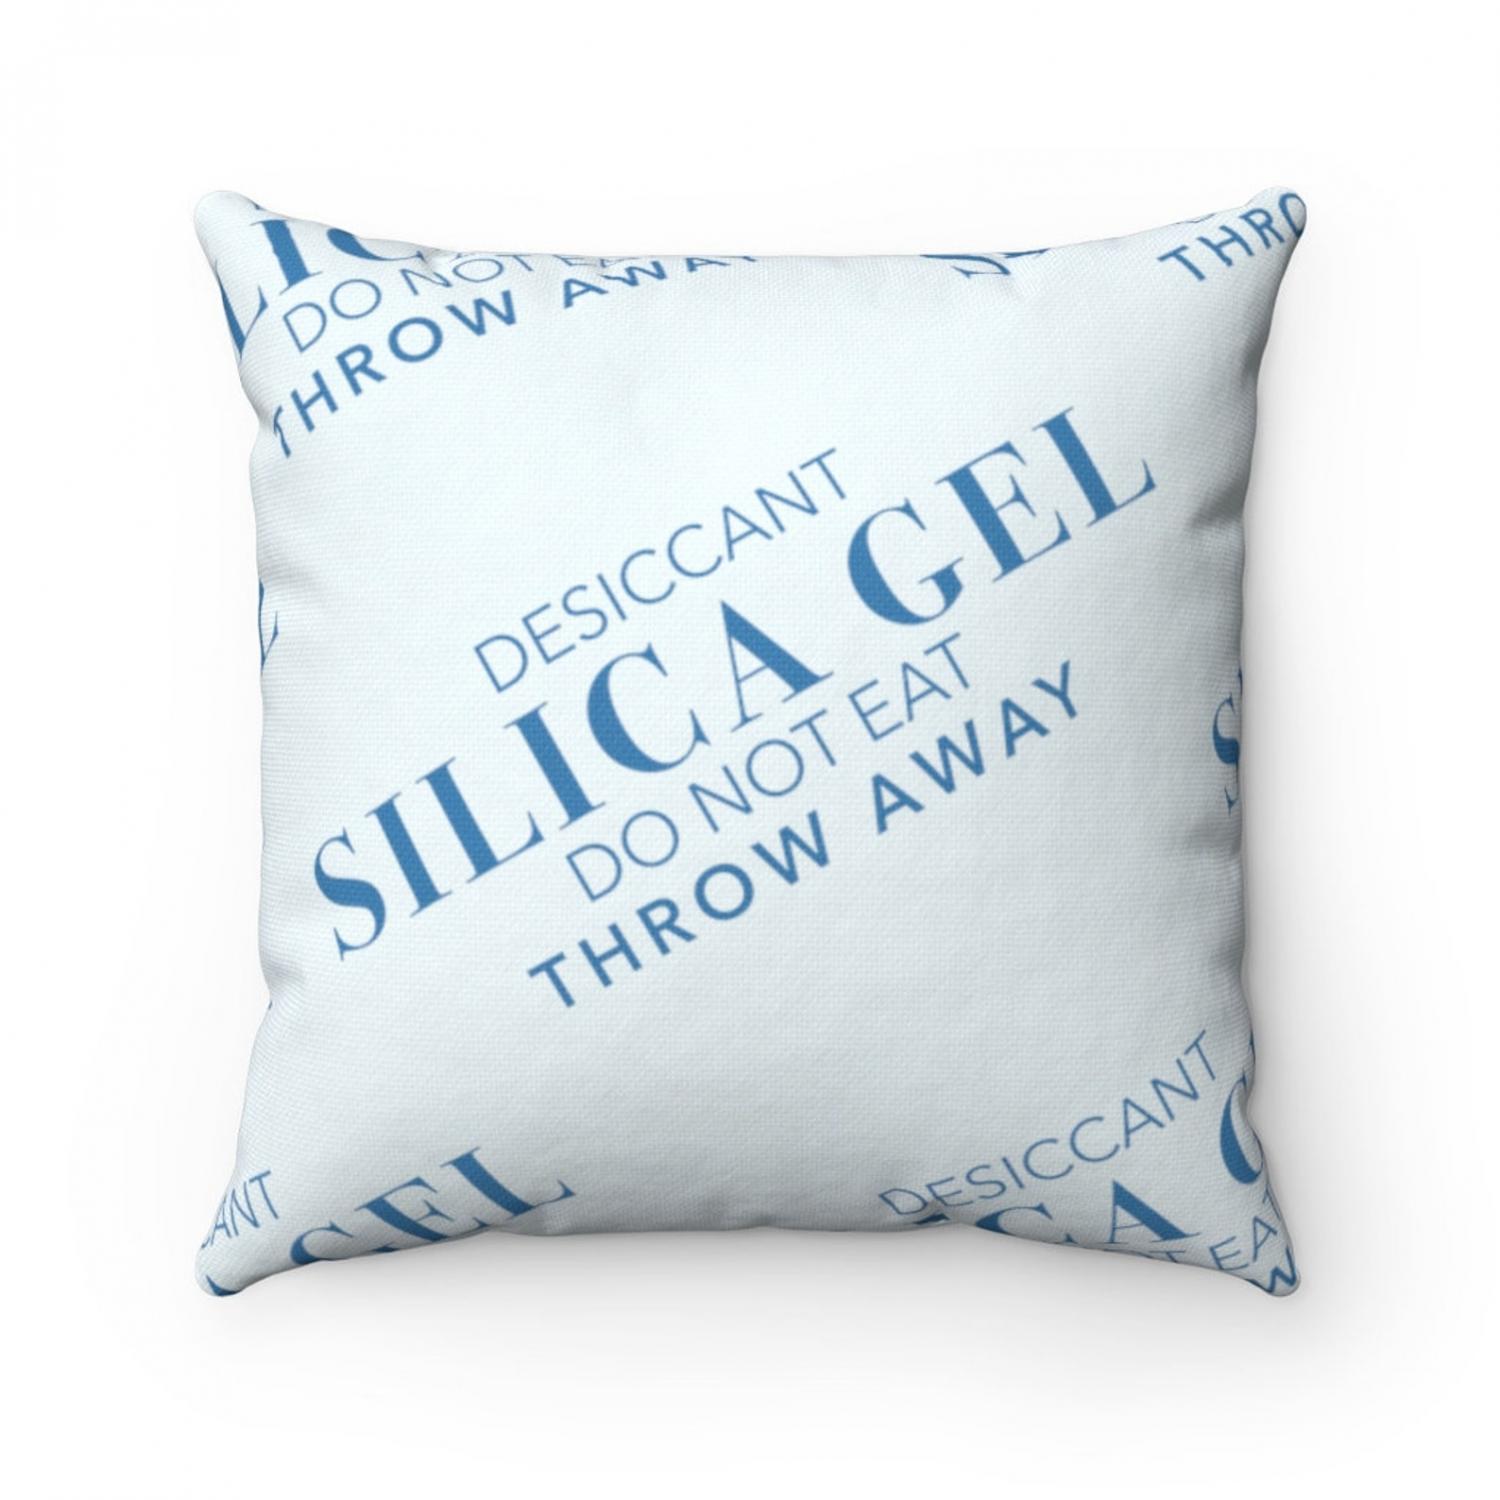 Silica Gel Pillow - Funny Do Not Eat Packet Pillow